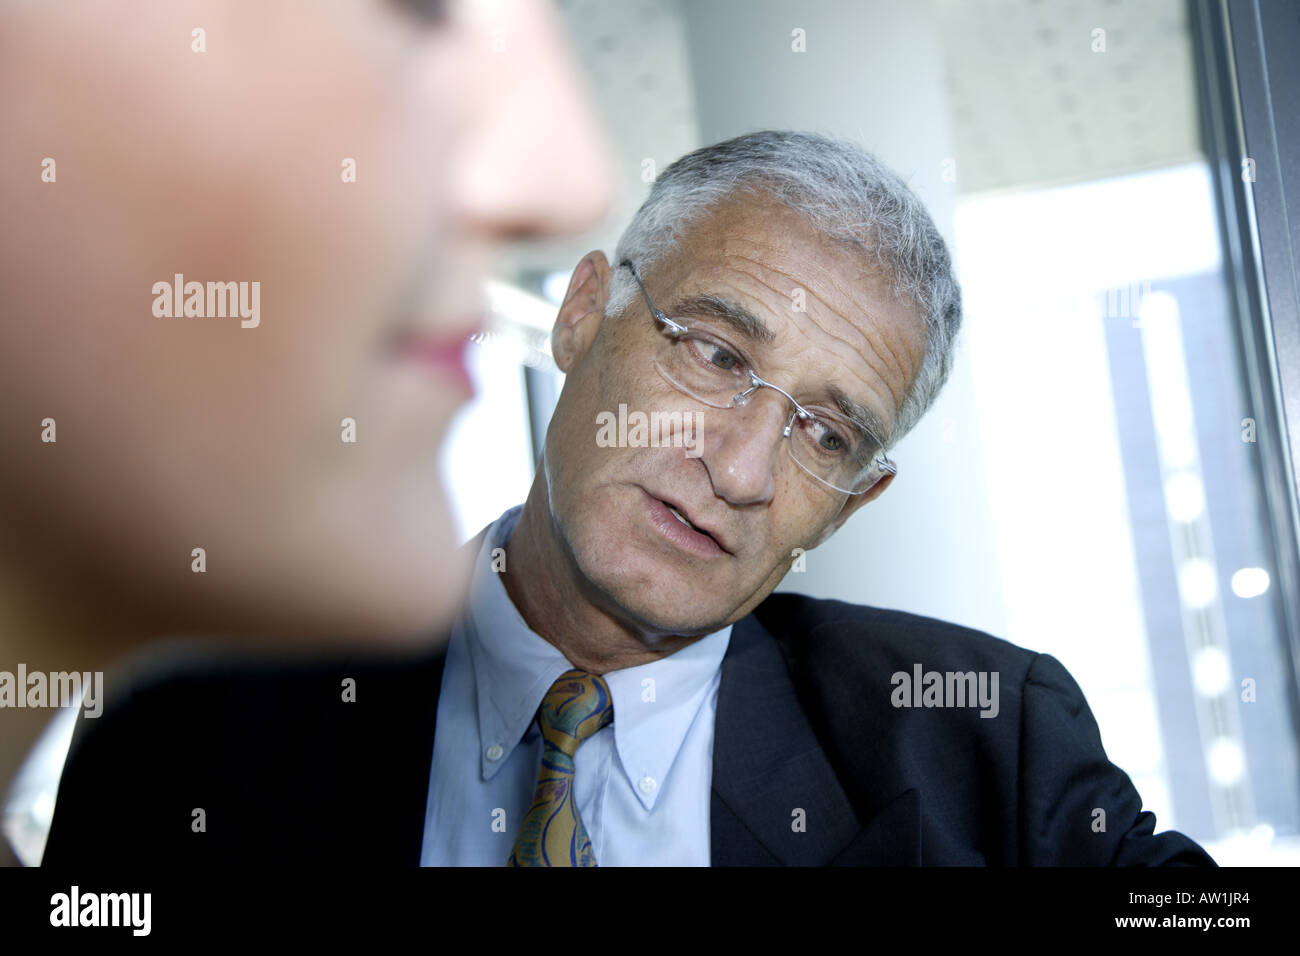 Business man controlling edits Stock Photo